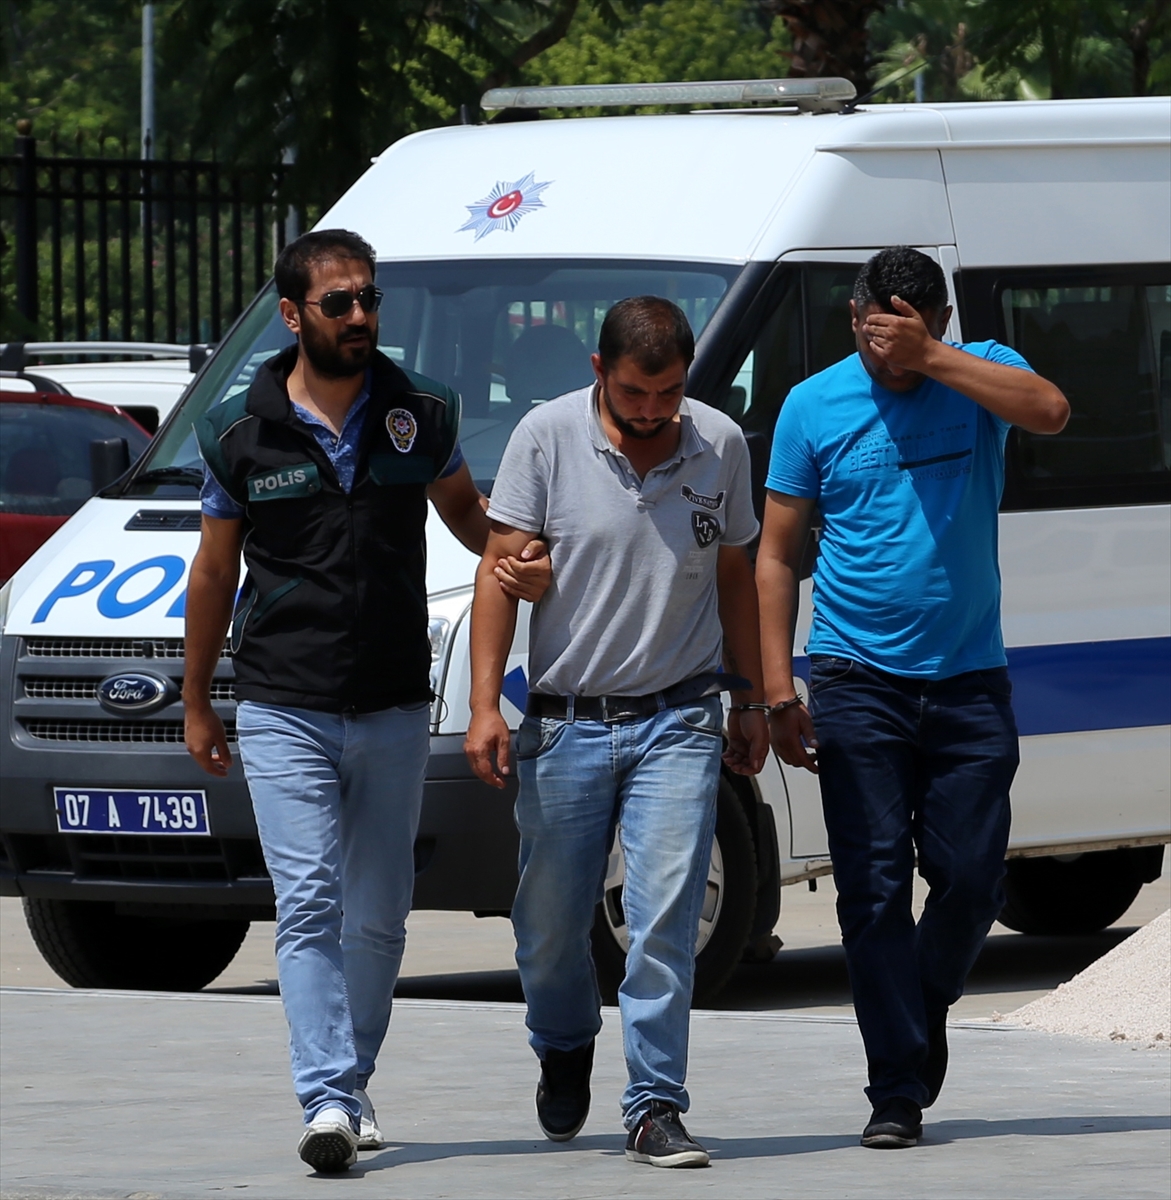 Antalya'da uyuşturucu operasyonu: 2 tutuklama